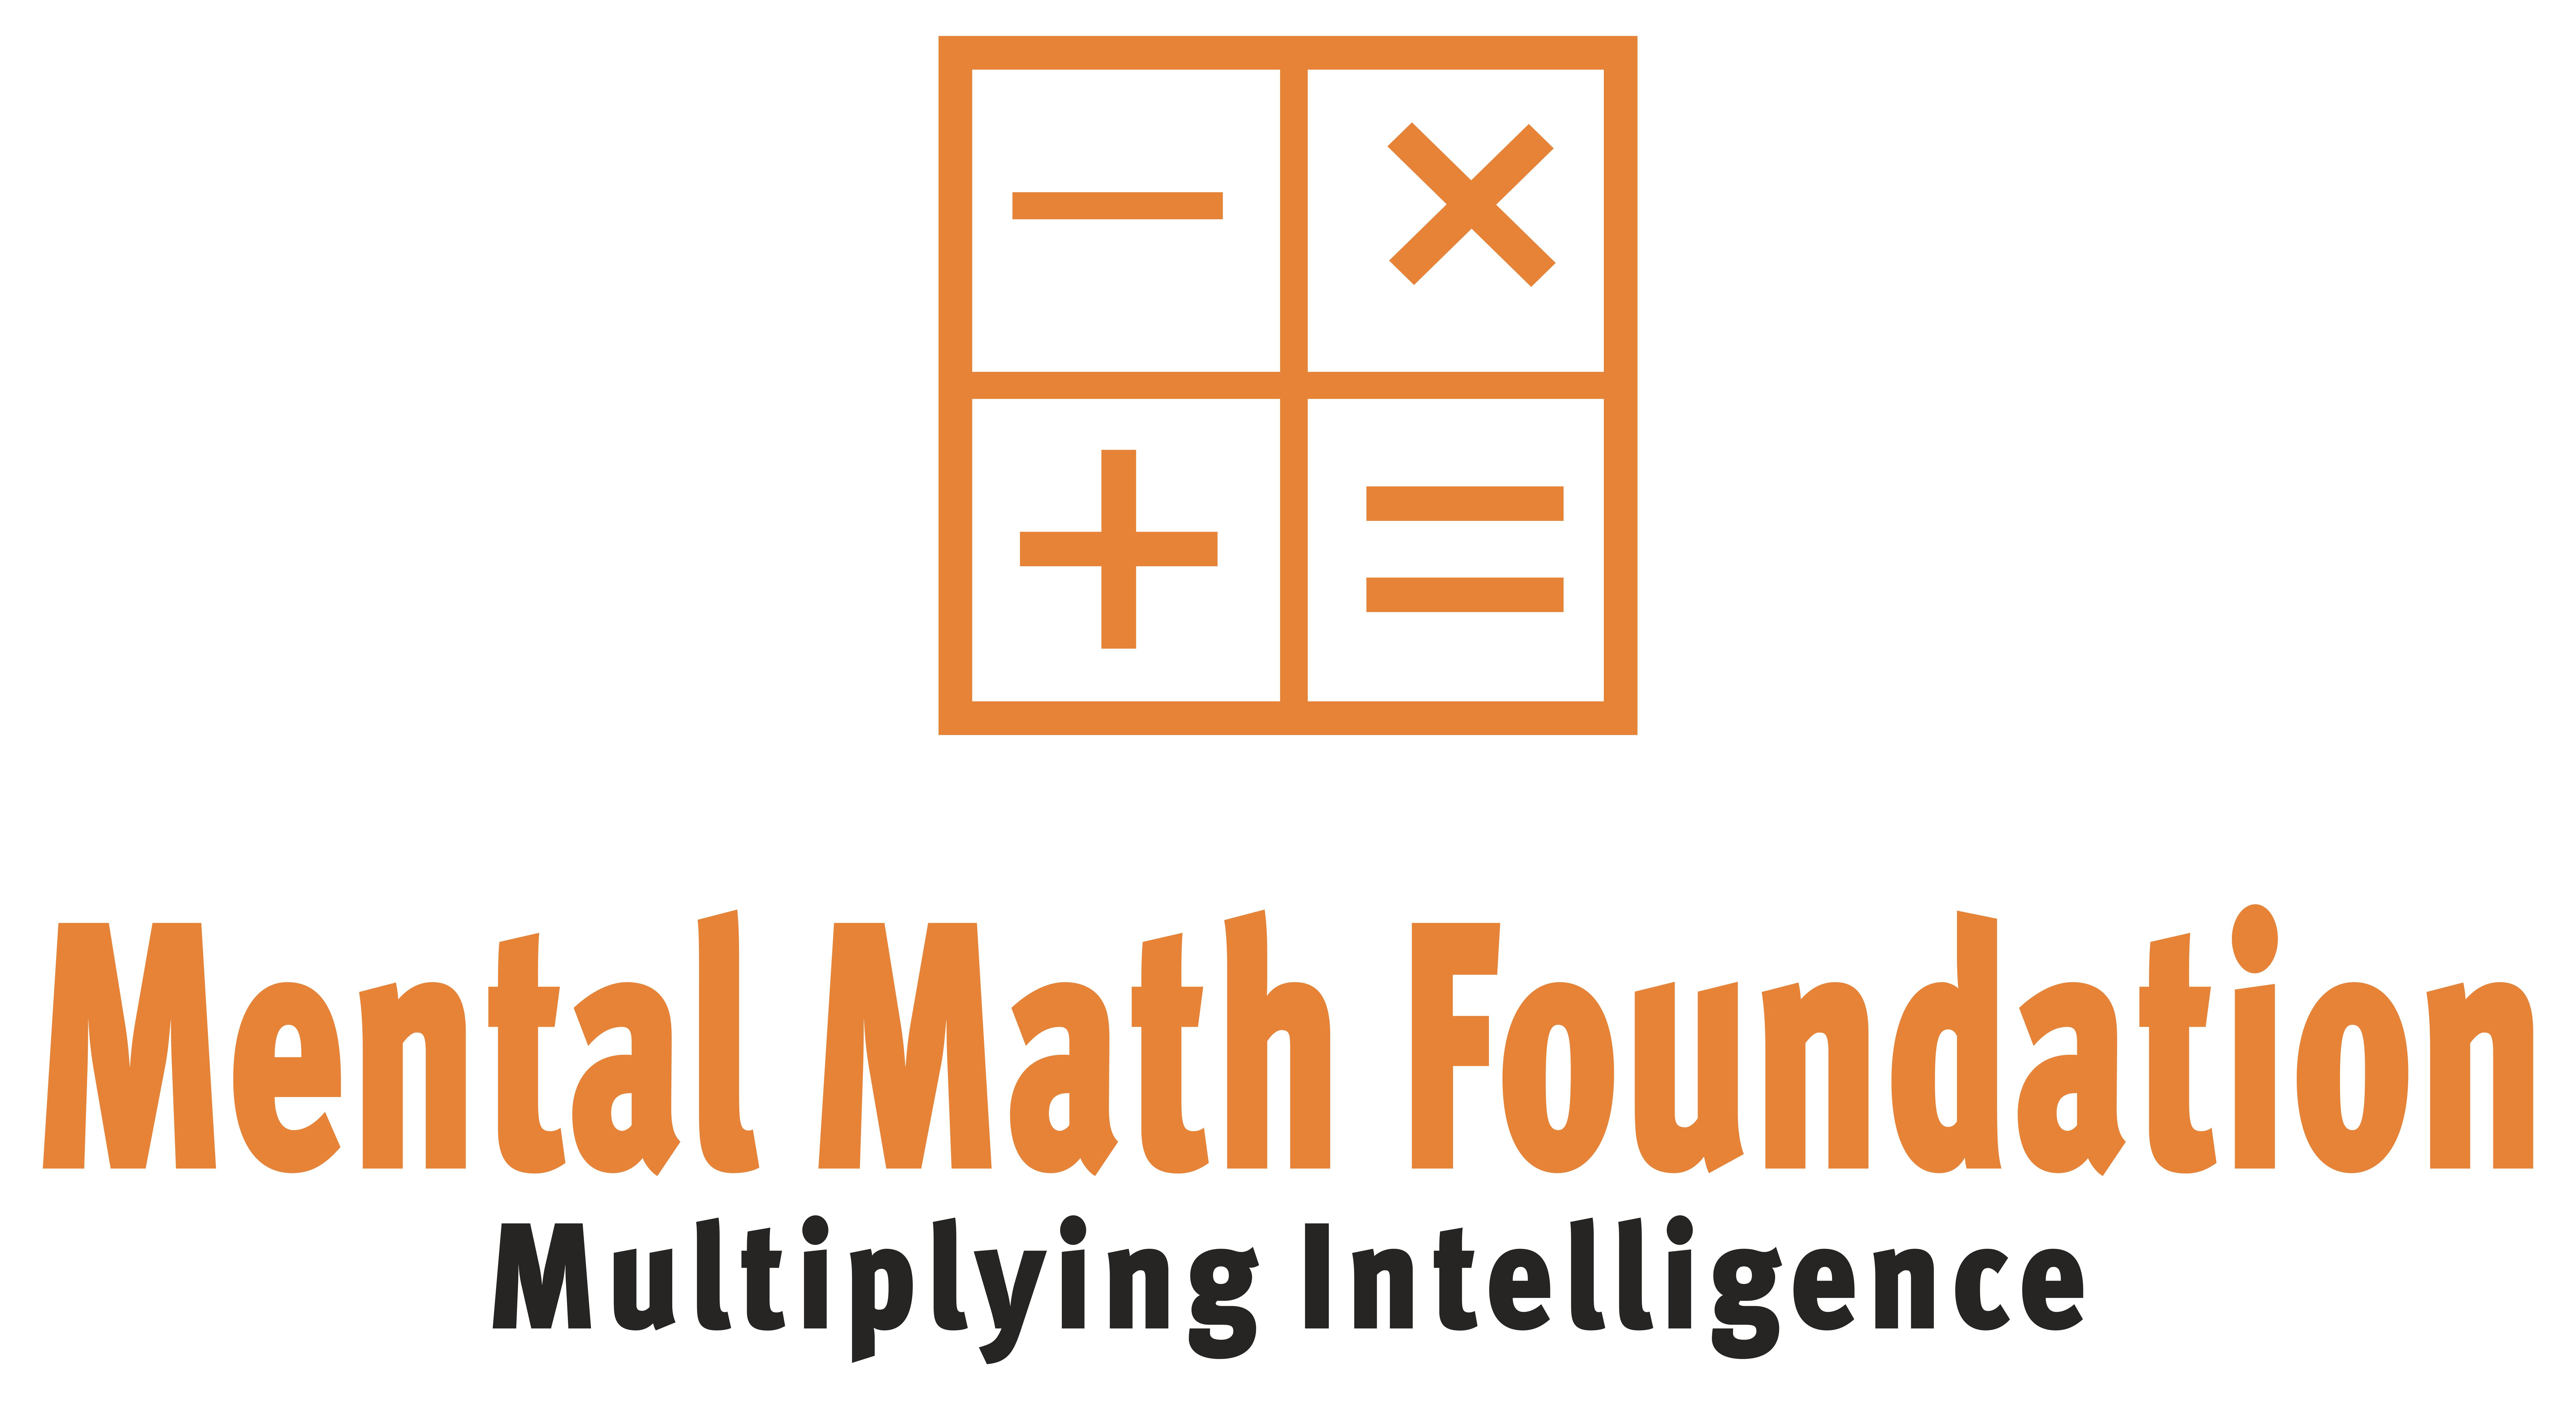 Mental Maths Foundation